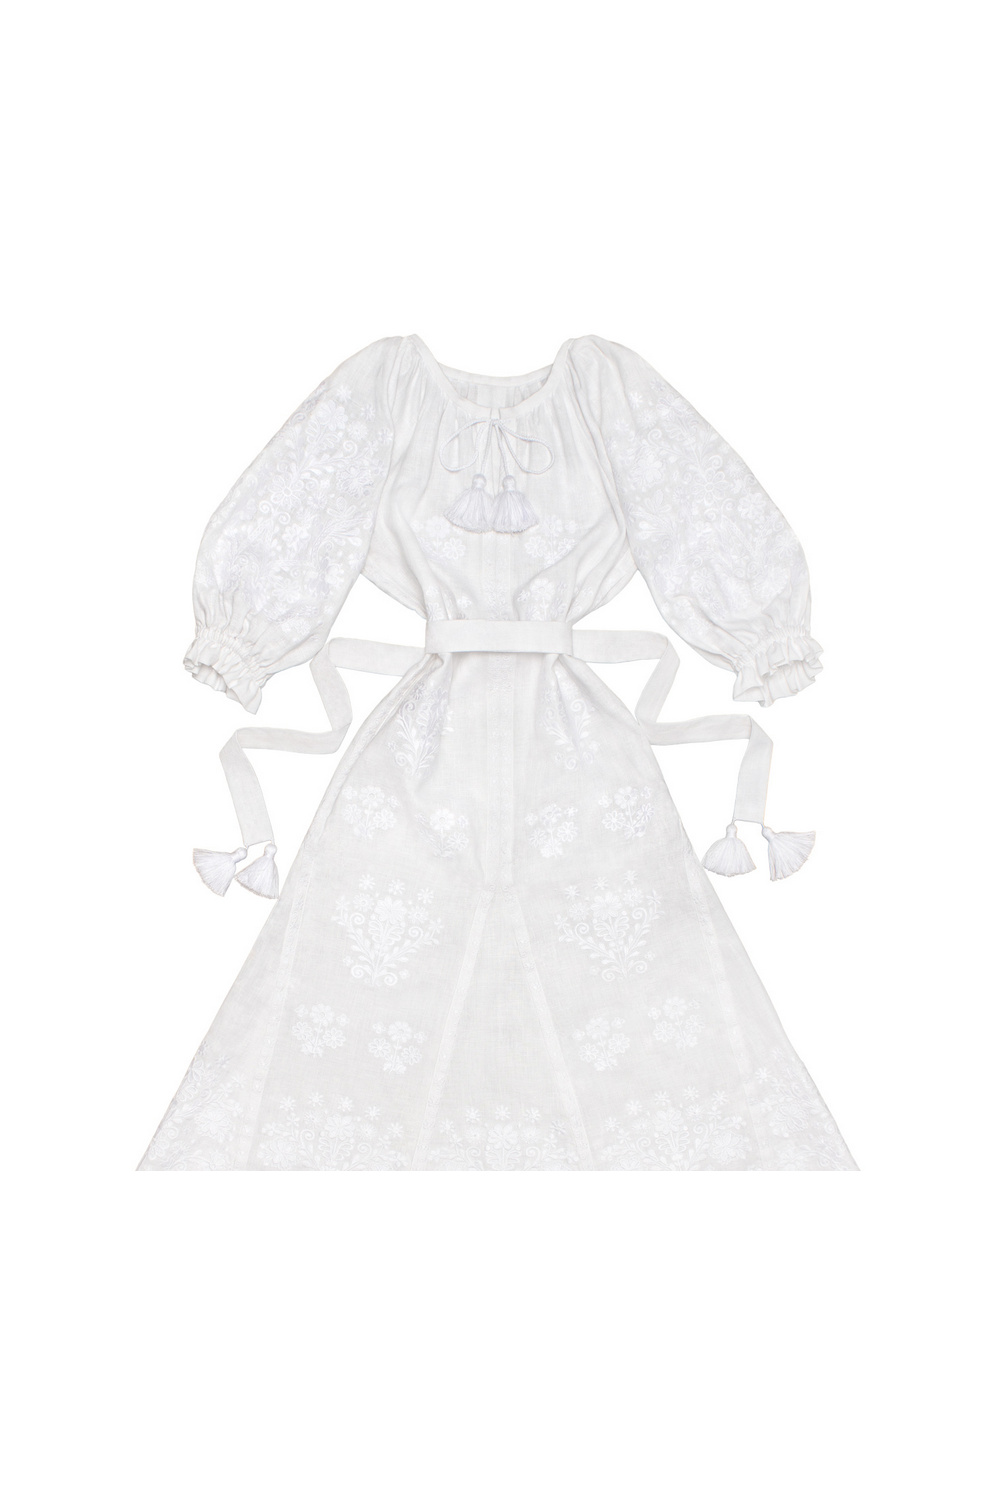 Buy Linen long White Ukrainian Vyshyvanka dress, Boho Hippie Folk Festival Comfortable embroidered clothes